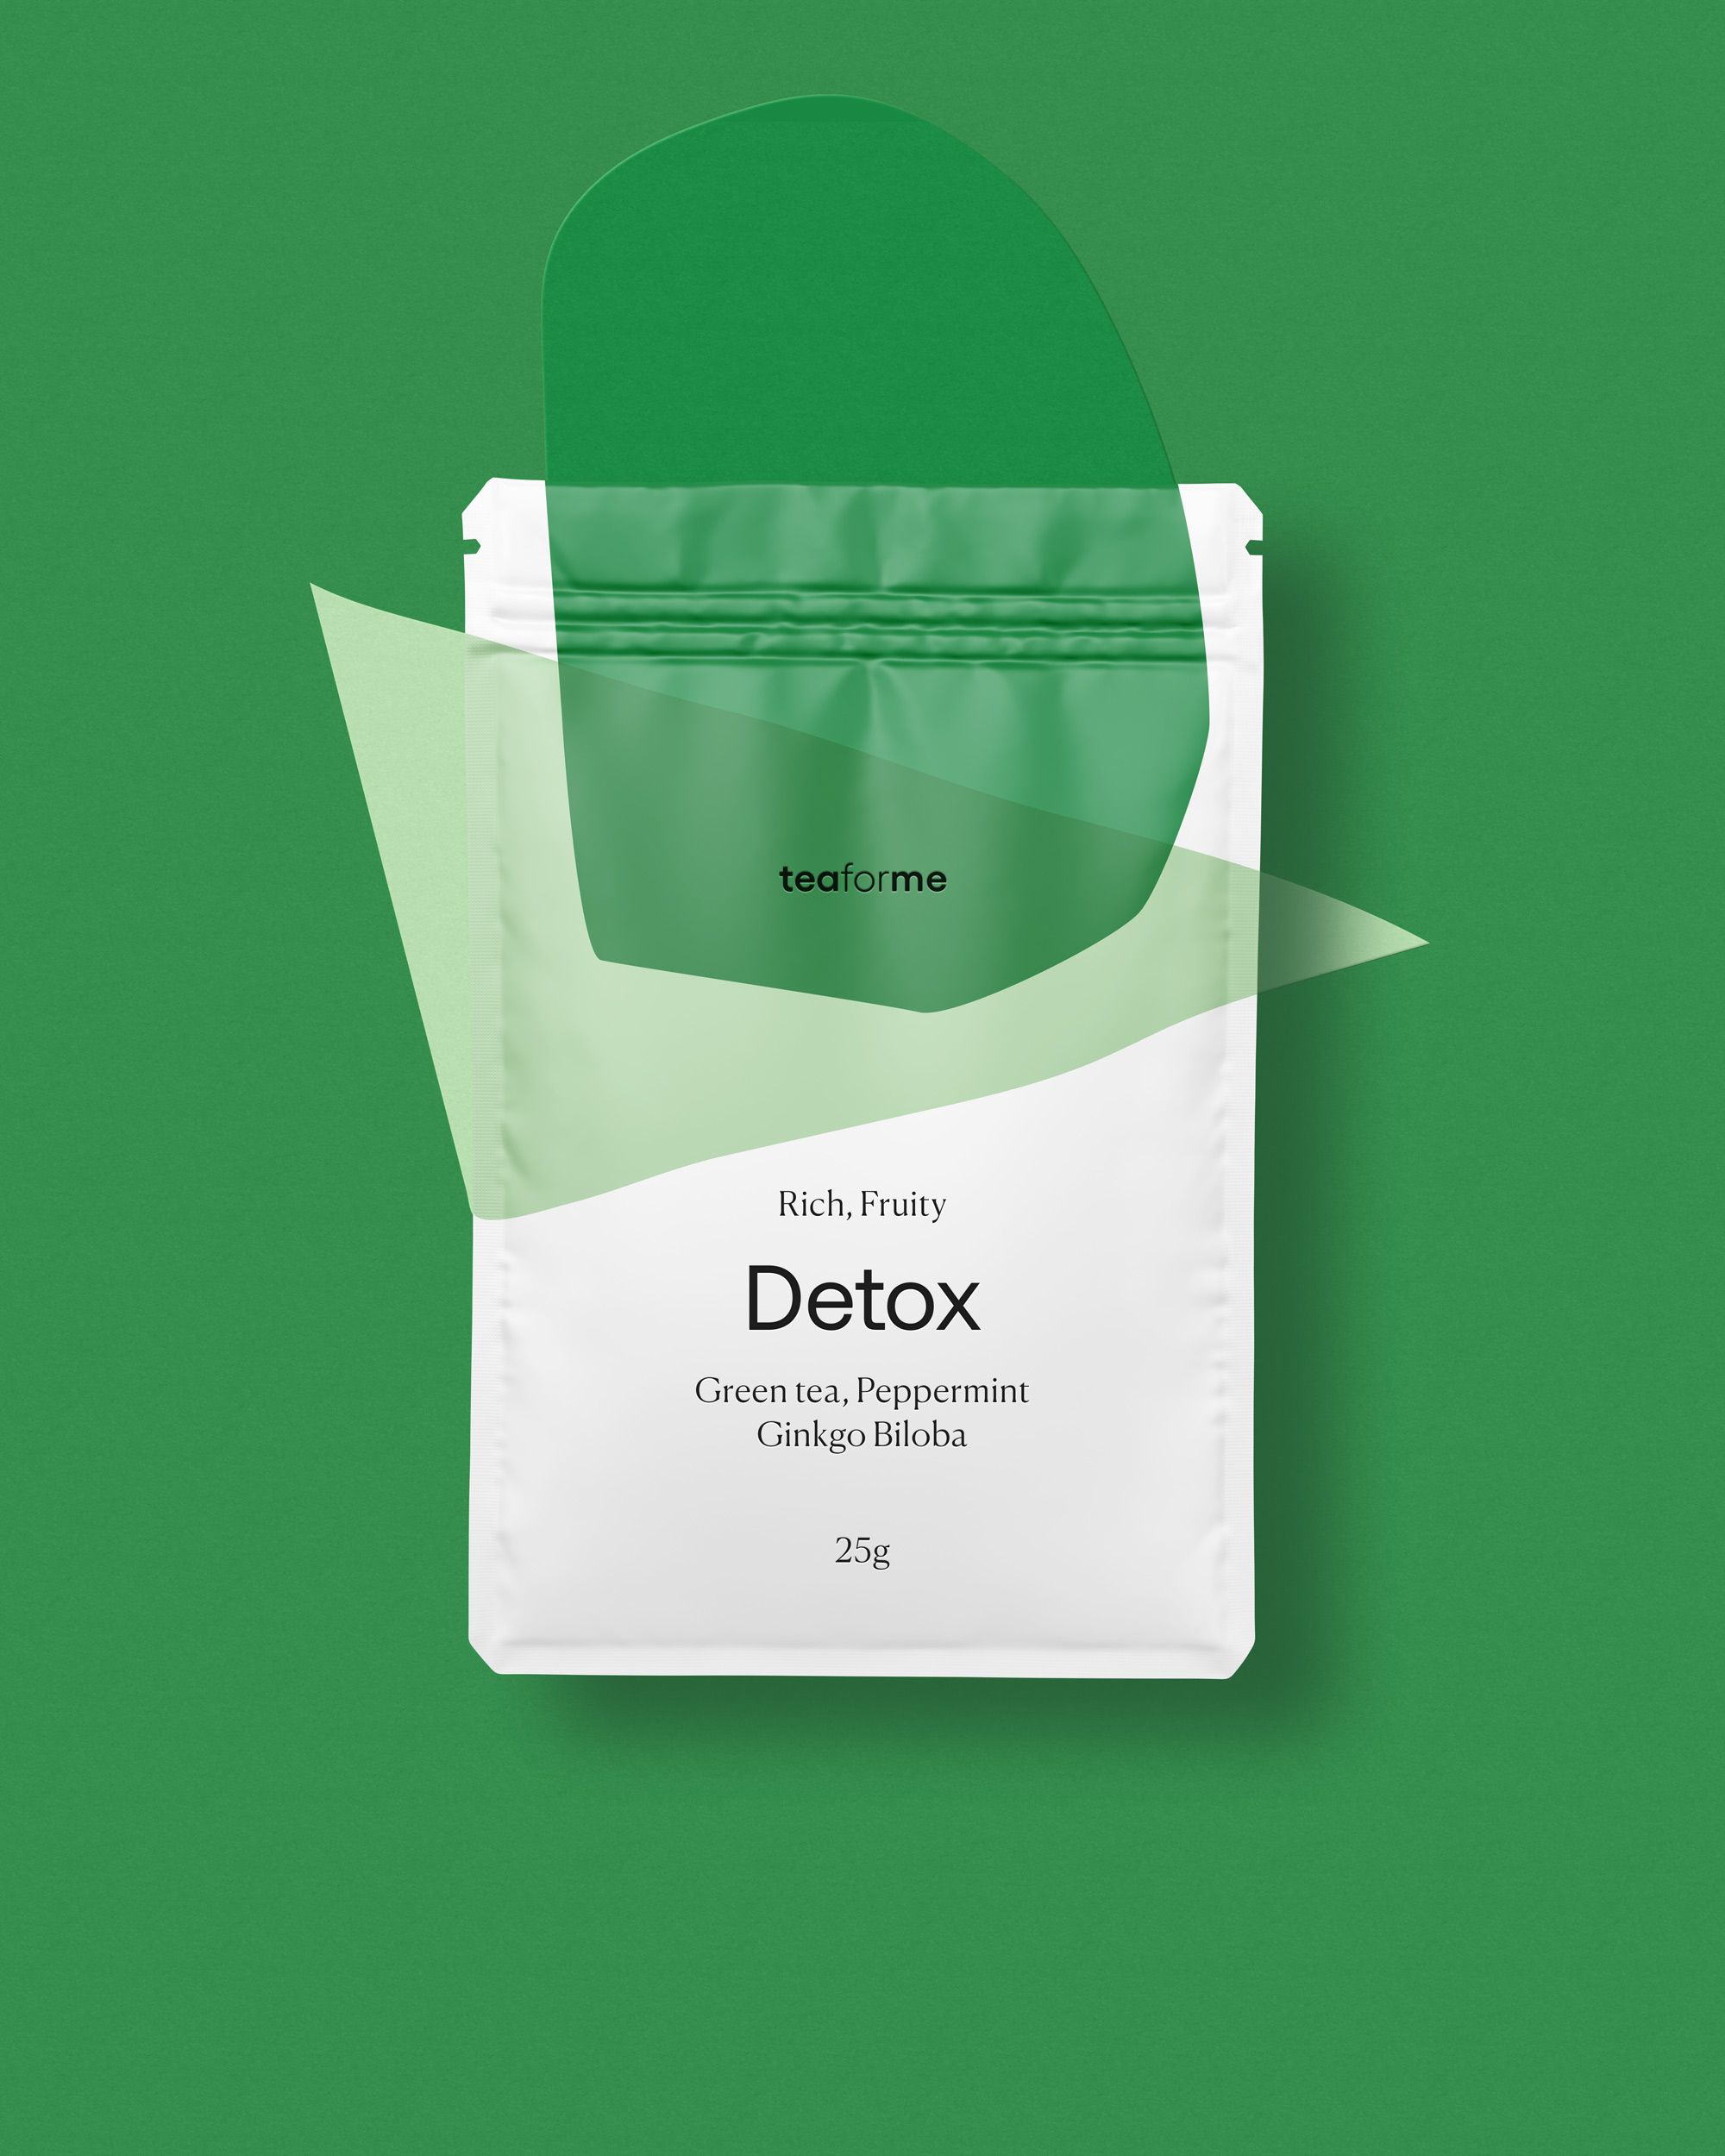 tea for me packaging detox vertical kommigraphics